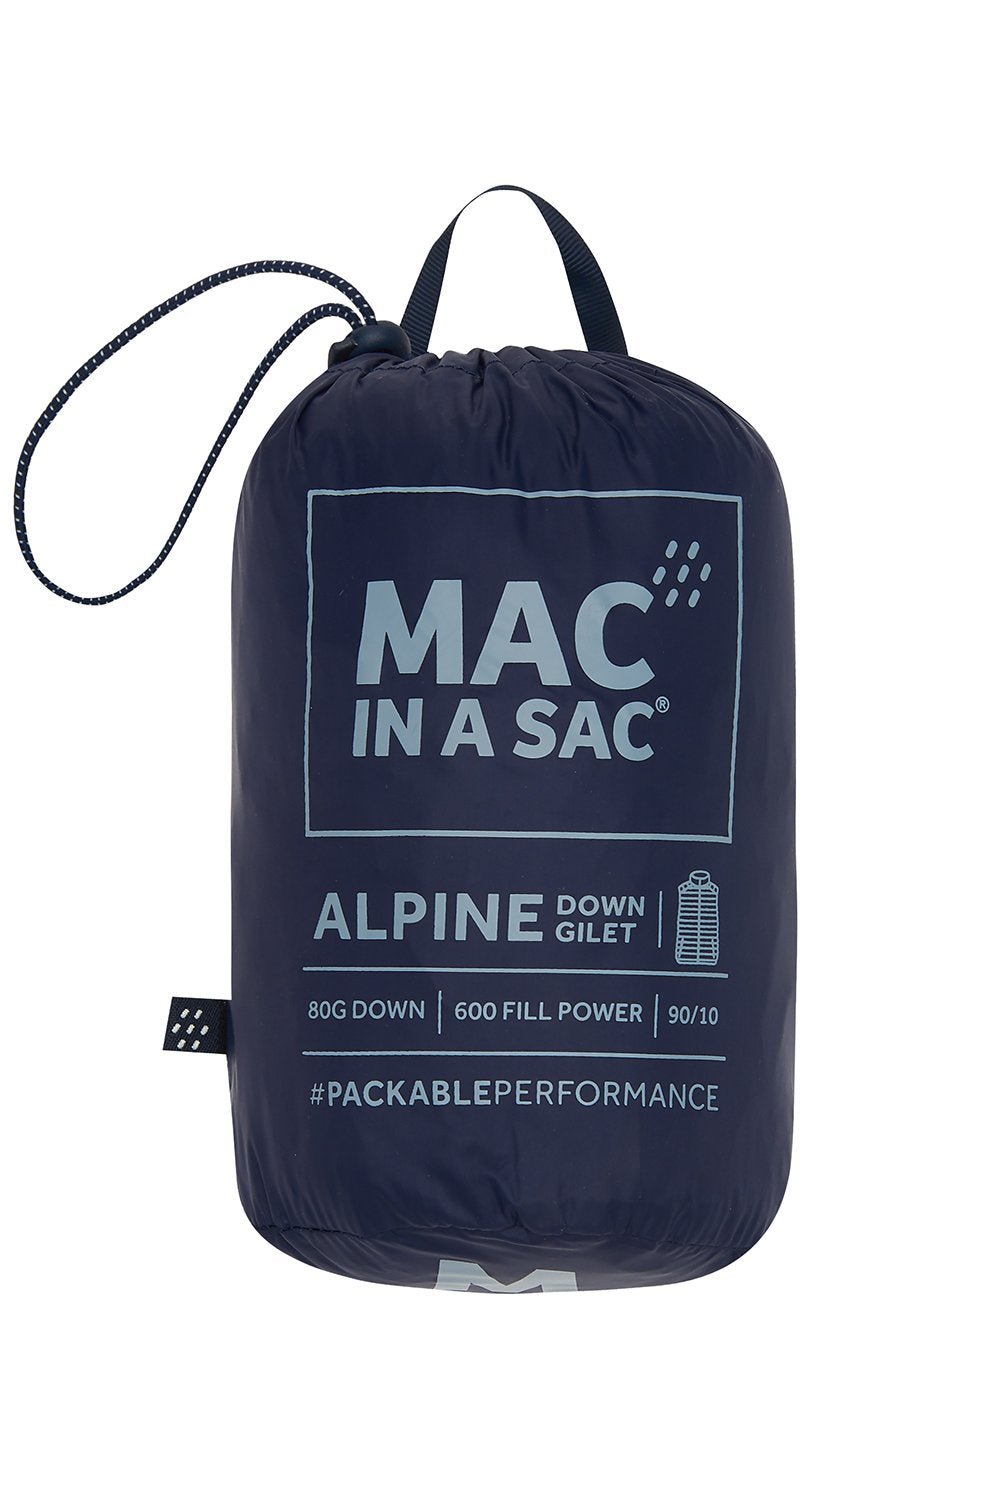 Alpine Down Gilet - Navy-Mac in a Sac